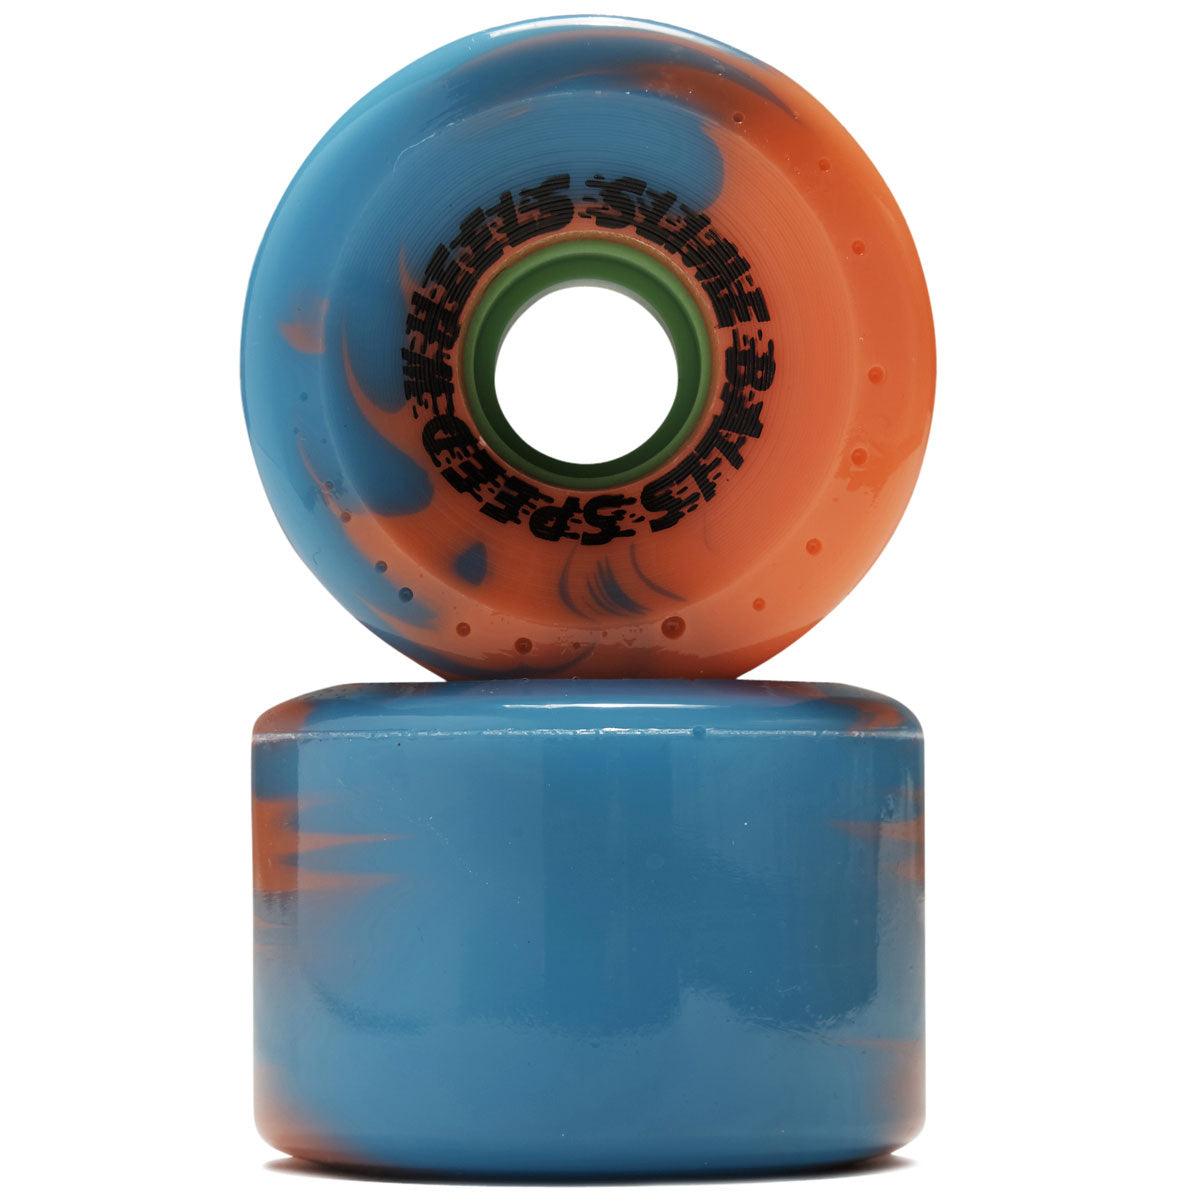 Slime Balls OG Slime 78a Skateboard Wheels - Pink/Blue Swirl - 66mm image 2